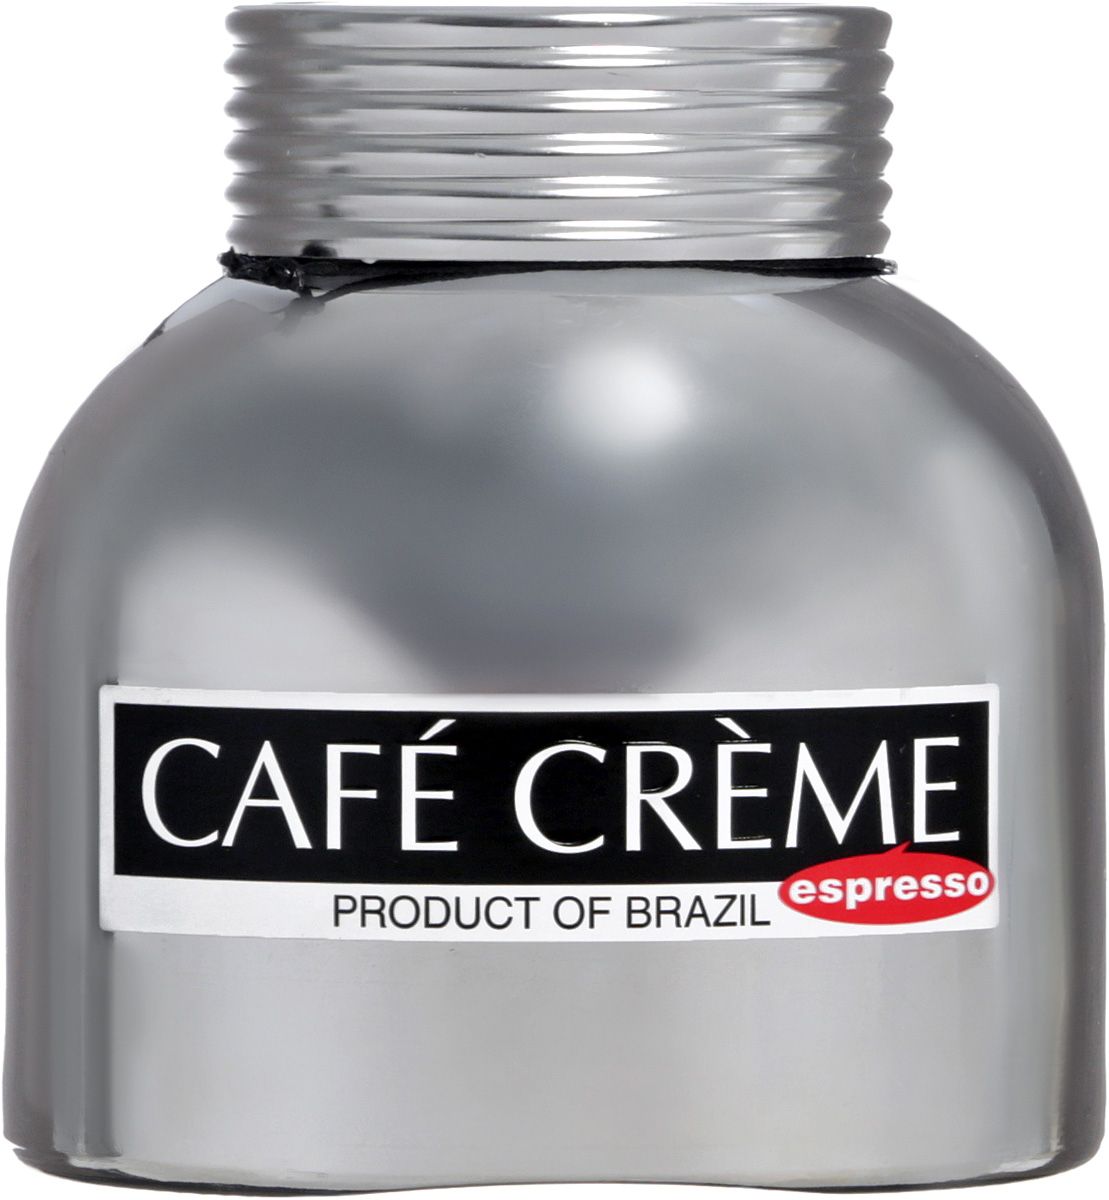 Cafe Creme spresso  , 100 